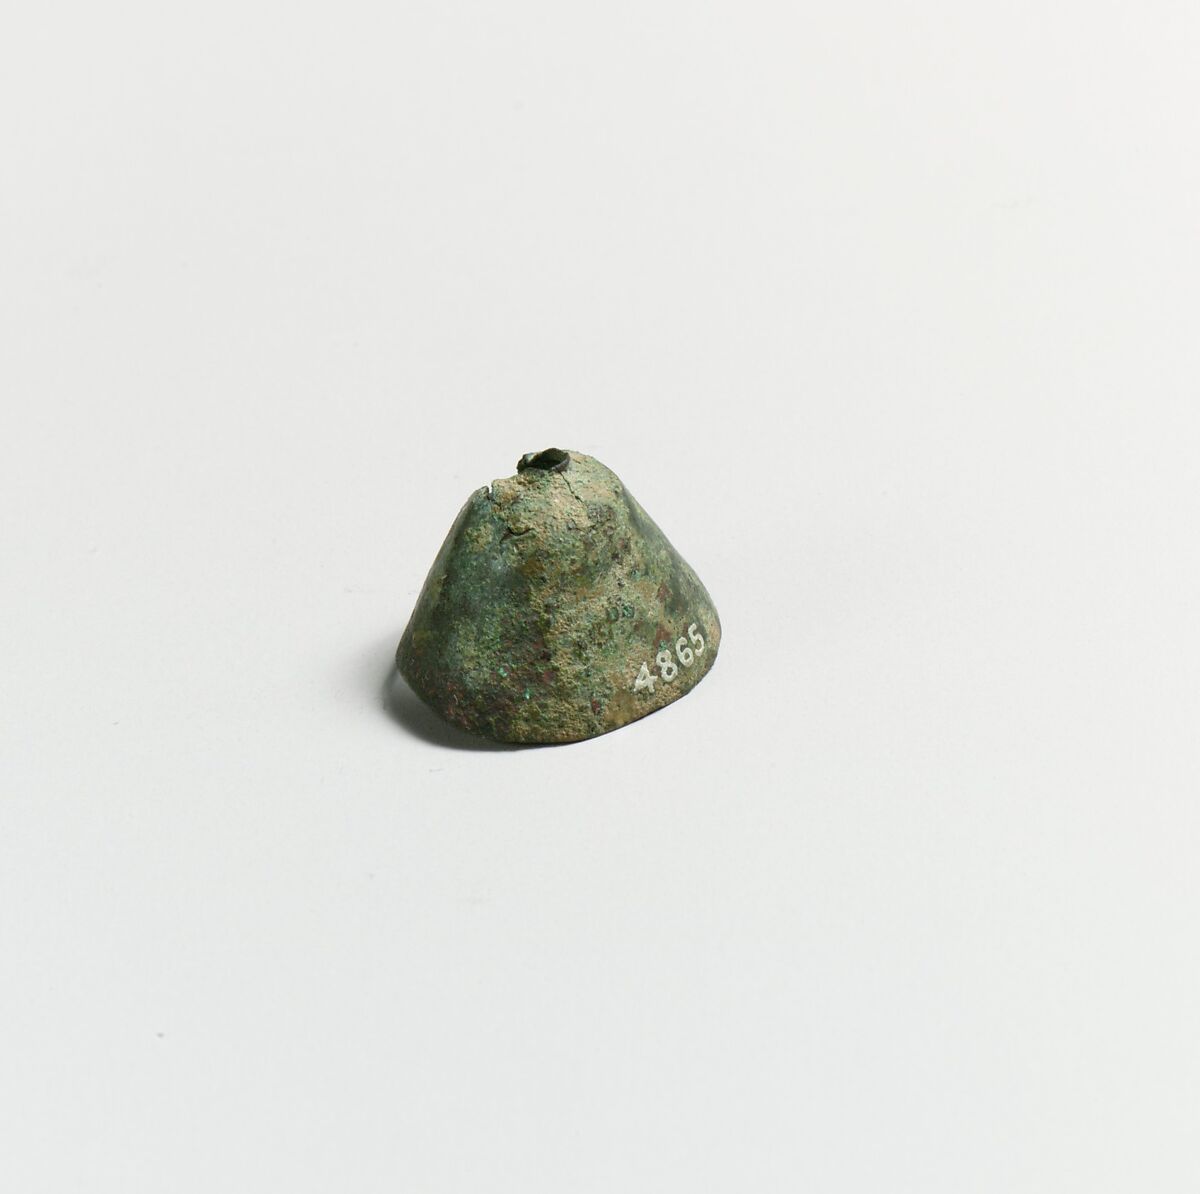 Bell, Bronze, Cypriot 